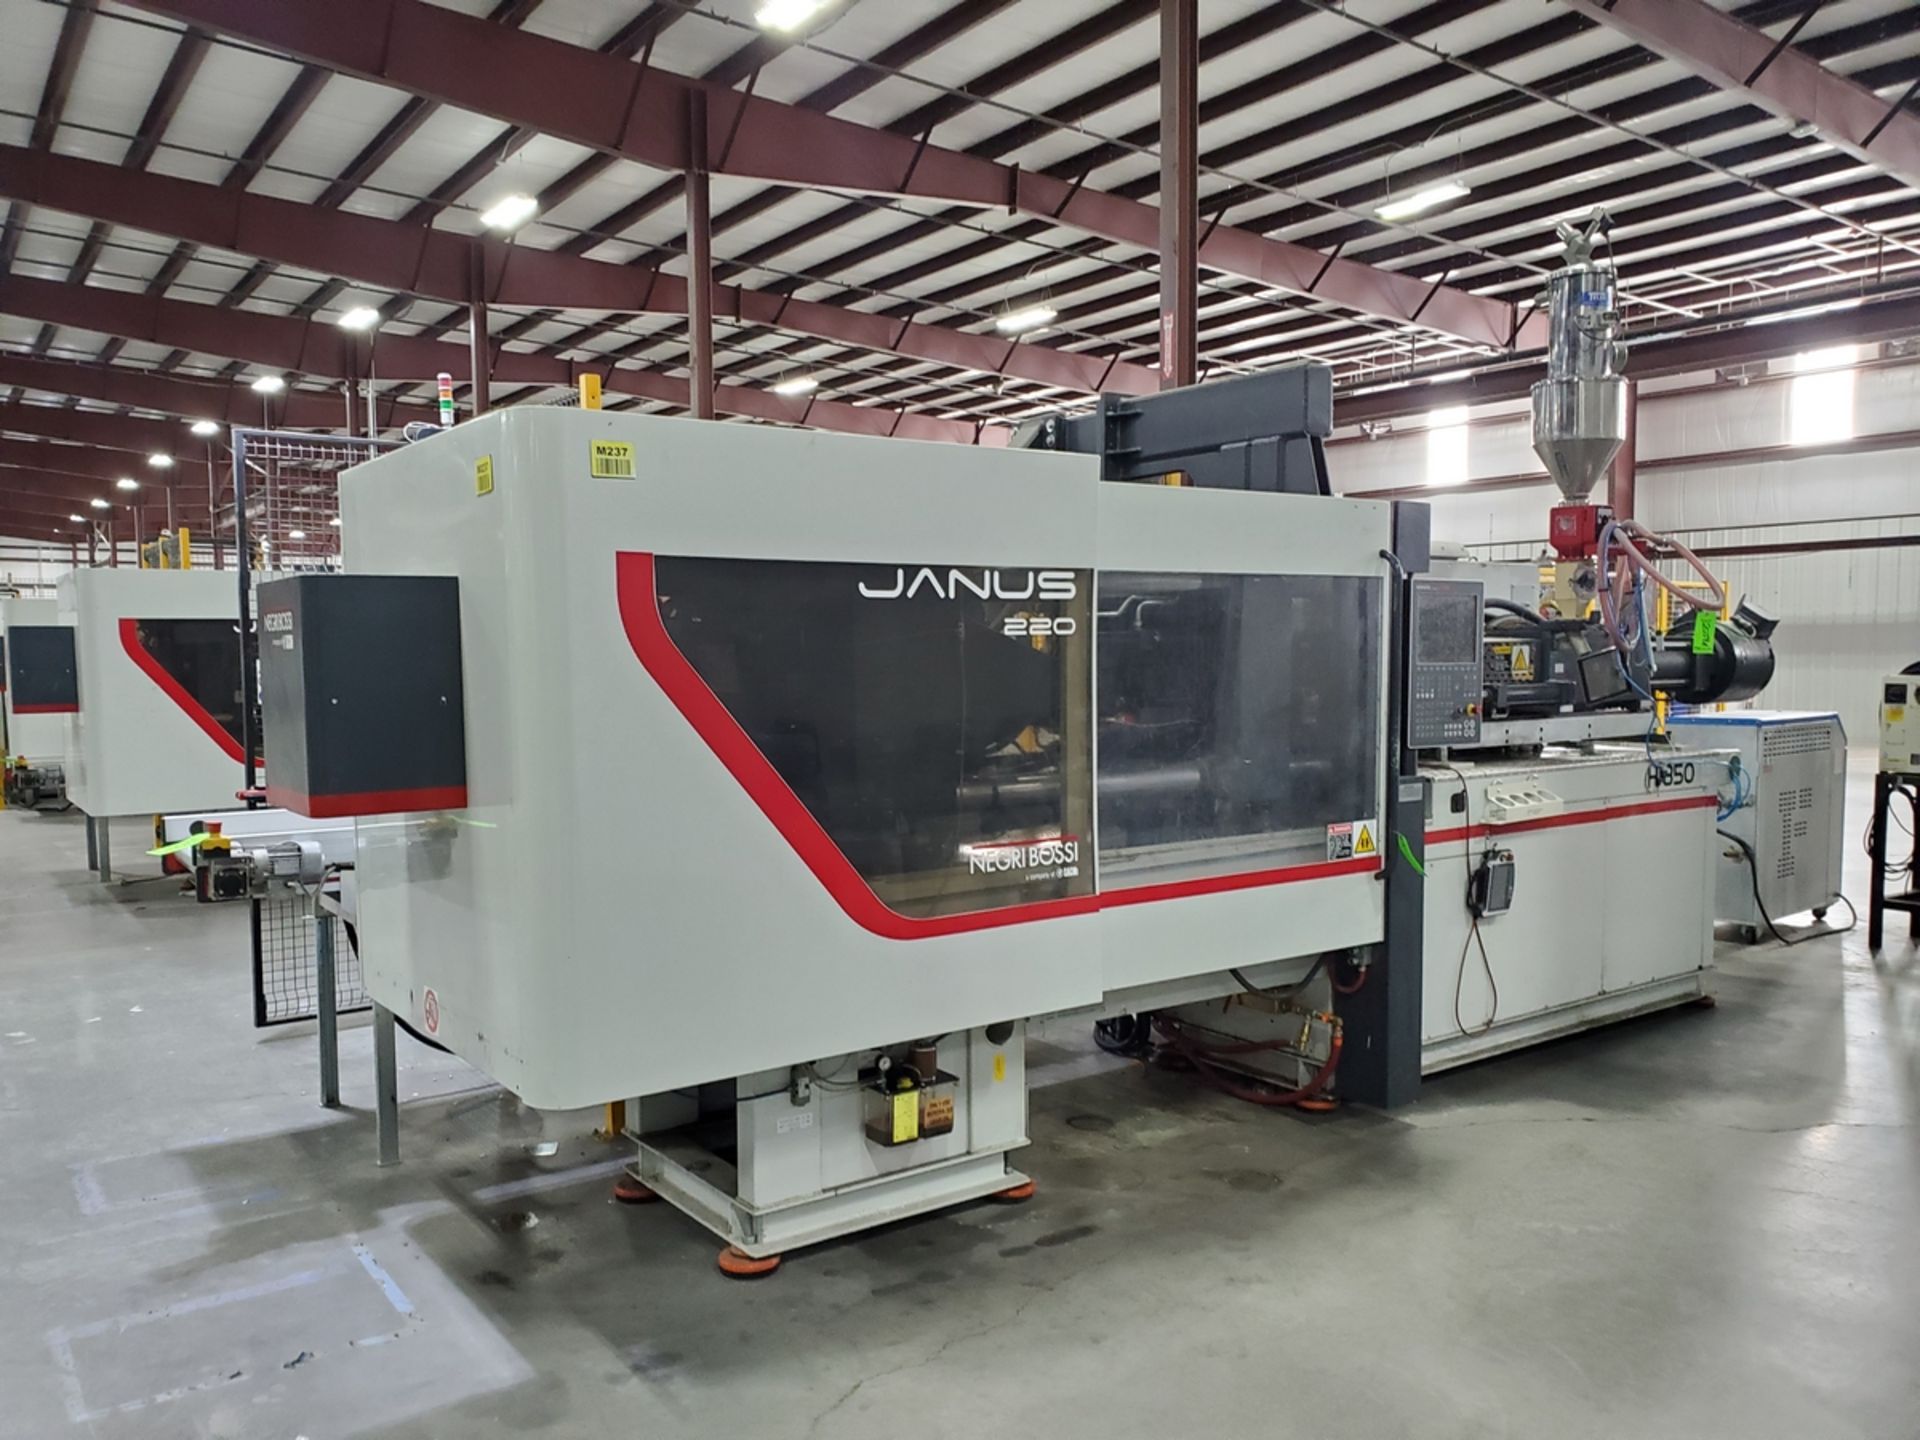 Negri Bossi Janus 220, 220 Ton Injection Molding Machine, New in 2014